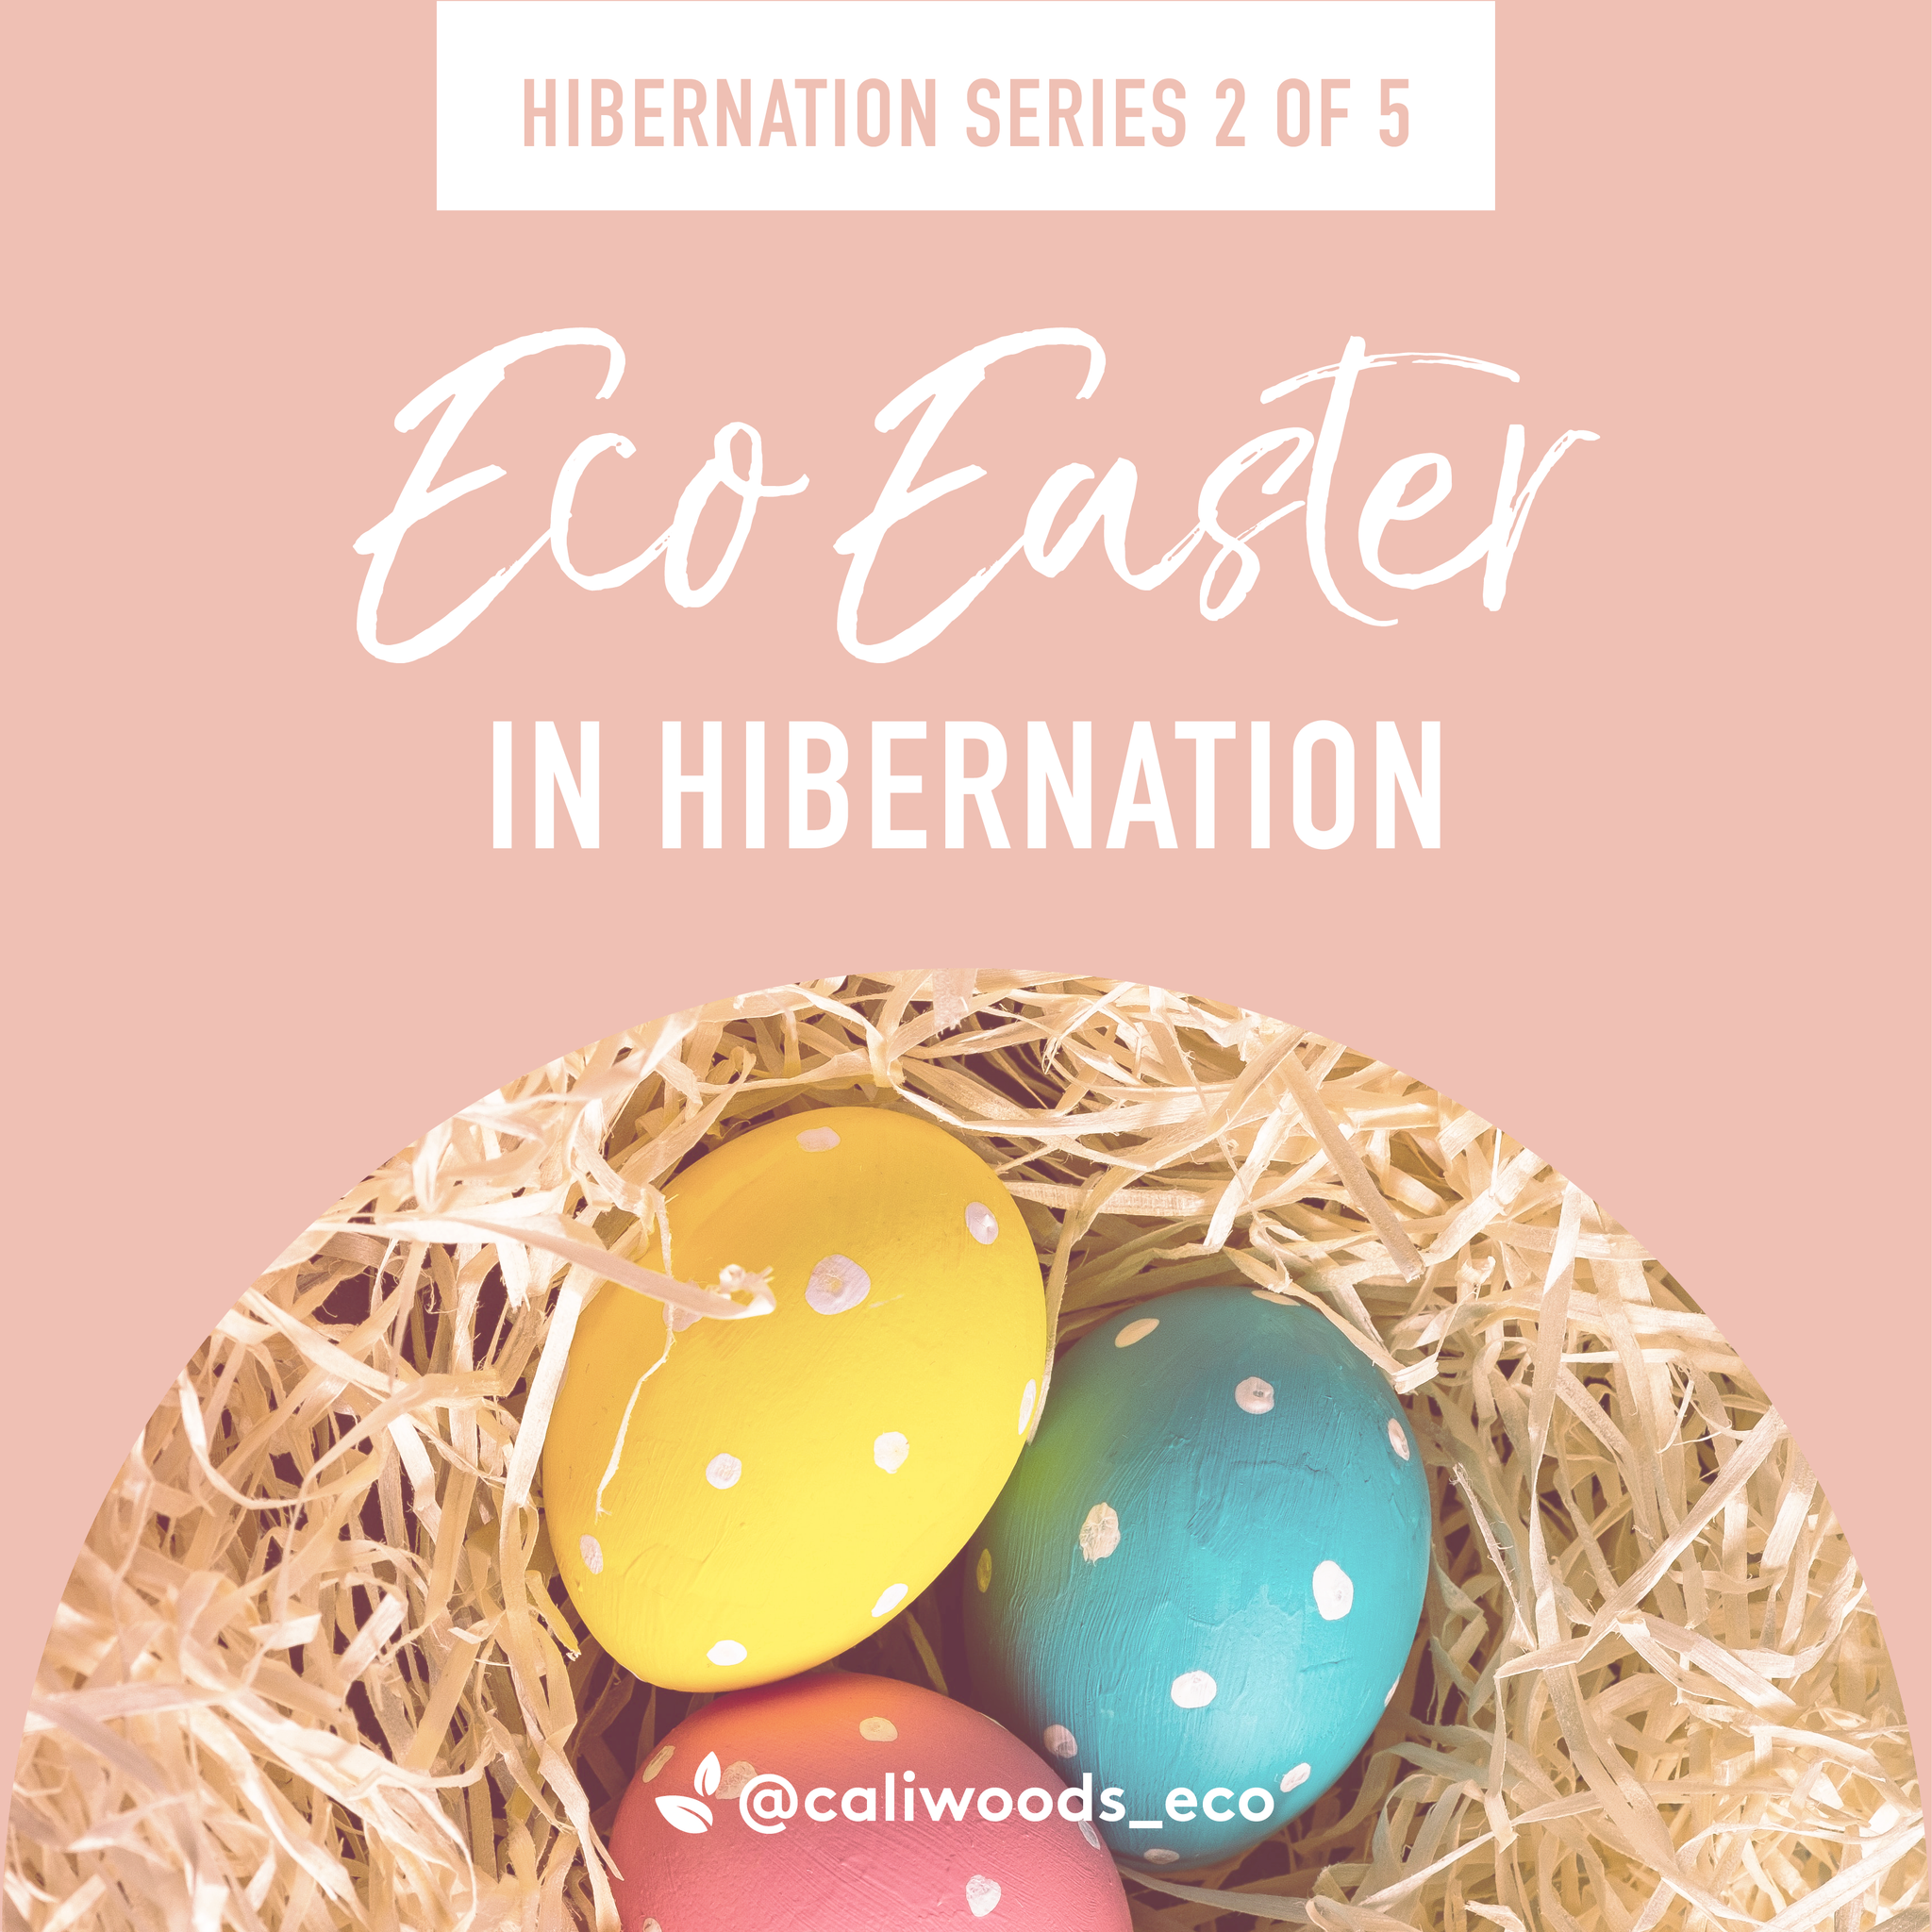 Hibernation Series 2 of 5: Eco Easter In Hibernation